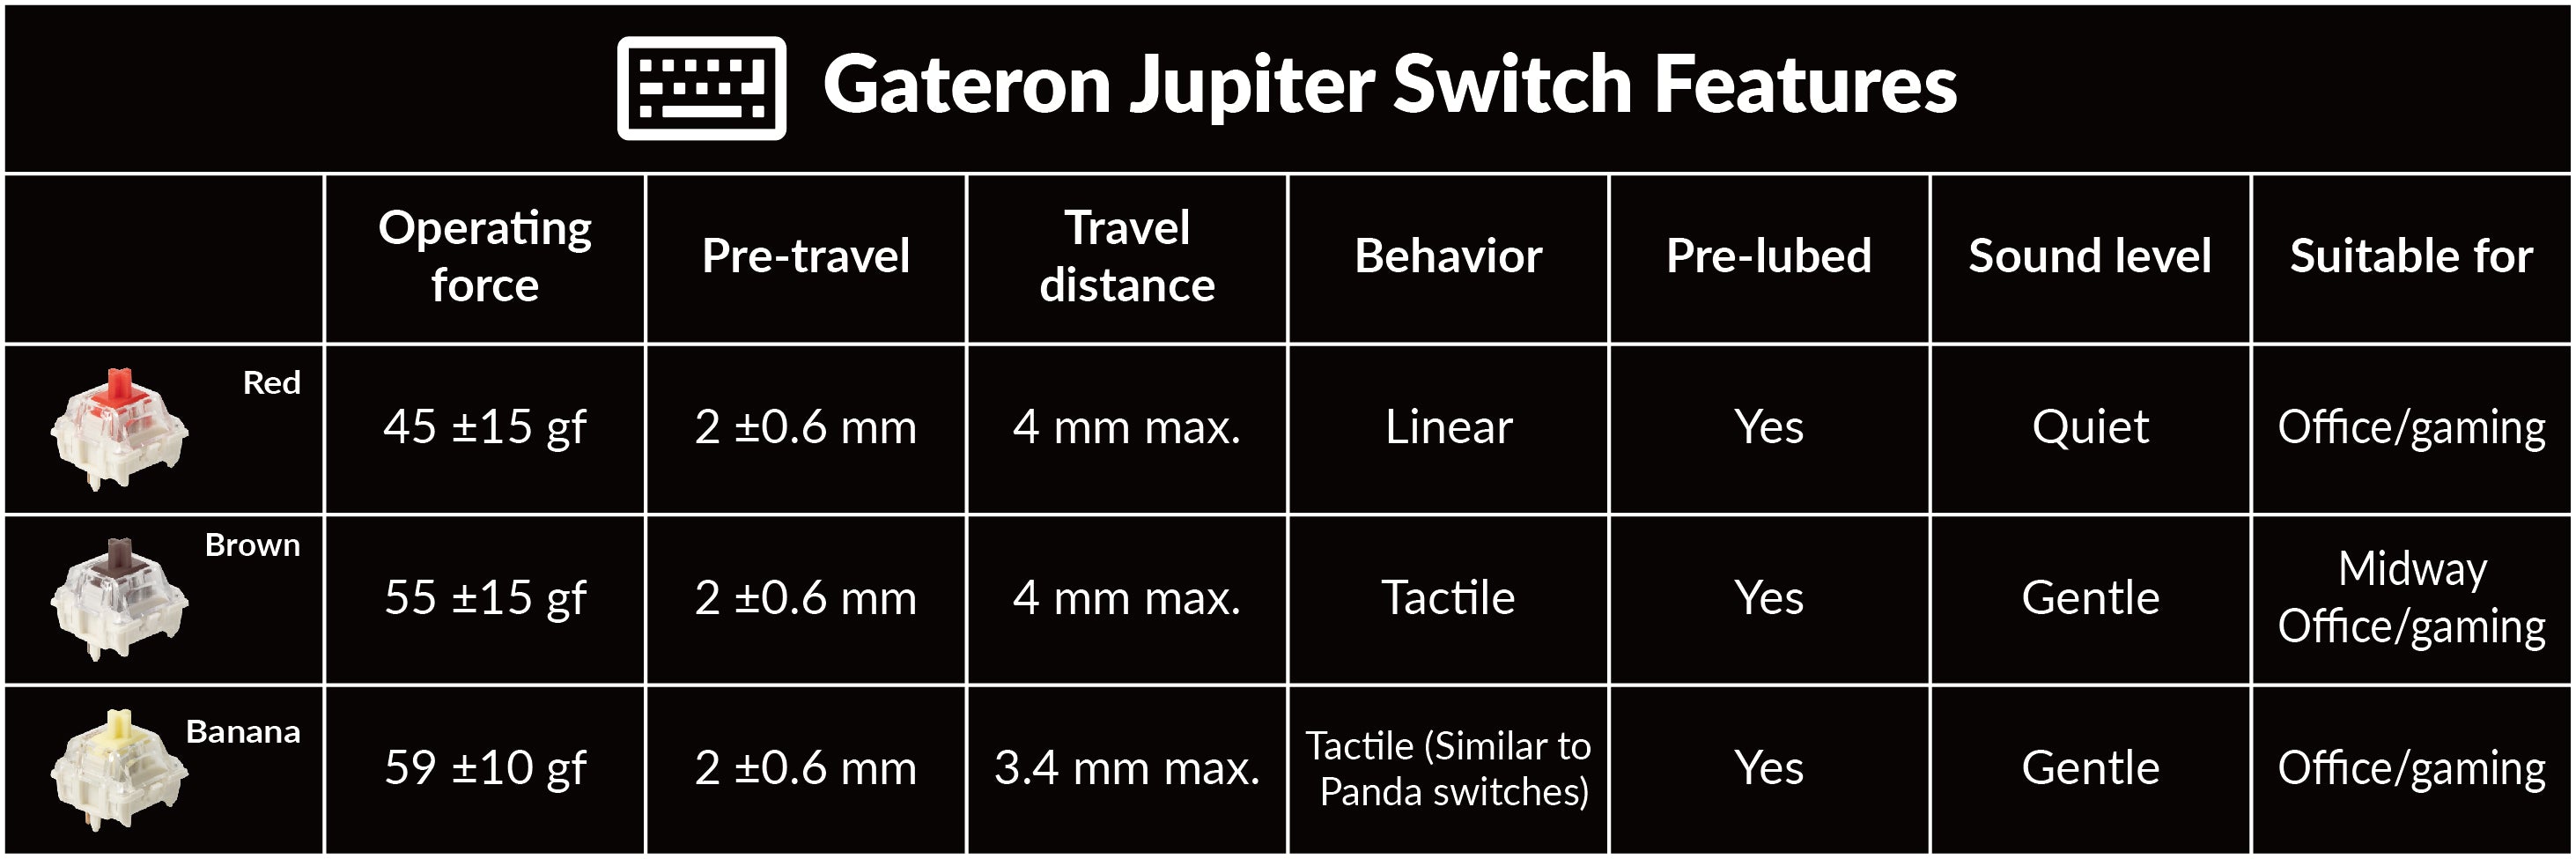 Gateron Jupiter Switch Features of Keychron V2 Max QMK/VIA Wireless Custom Mechanical Keyboard